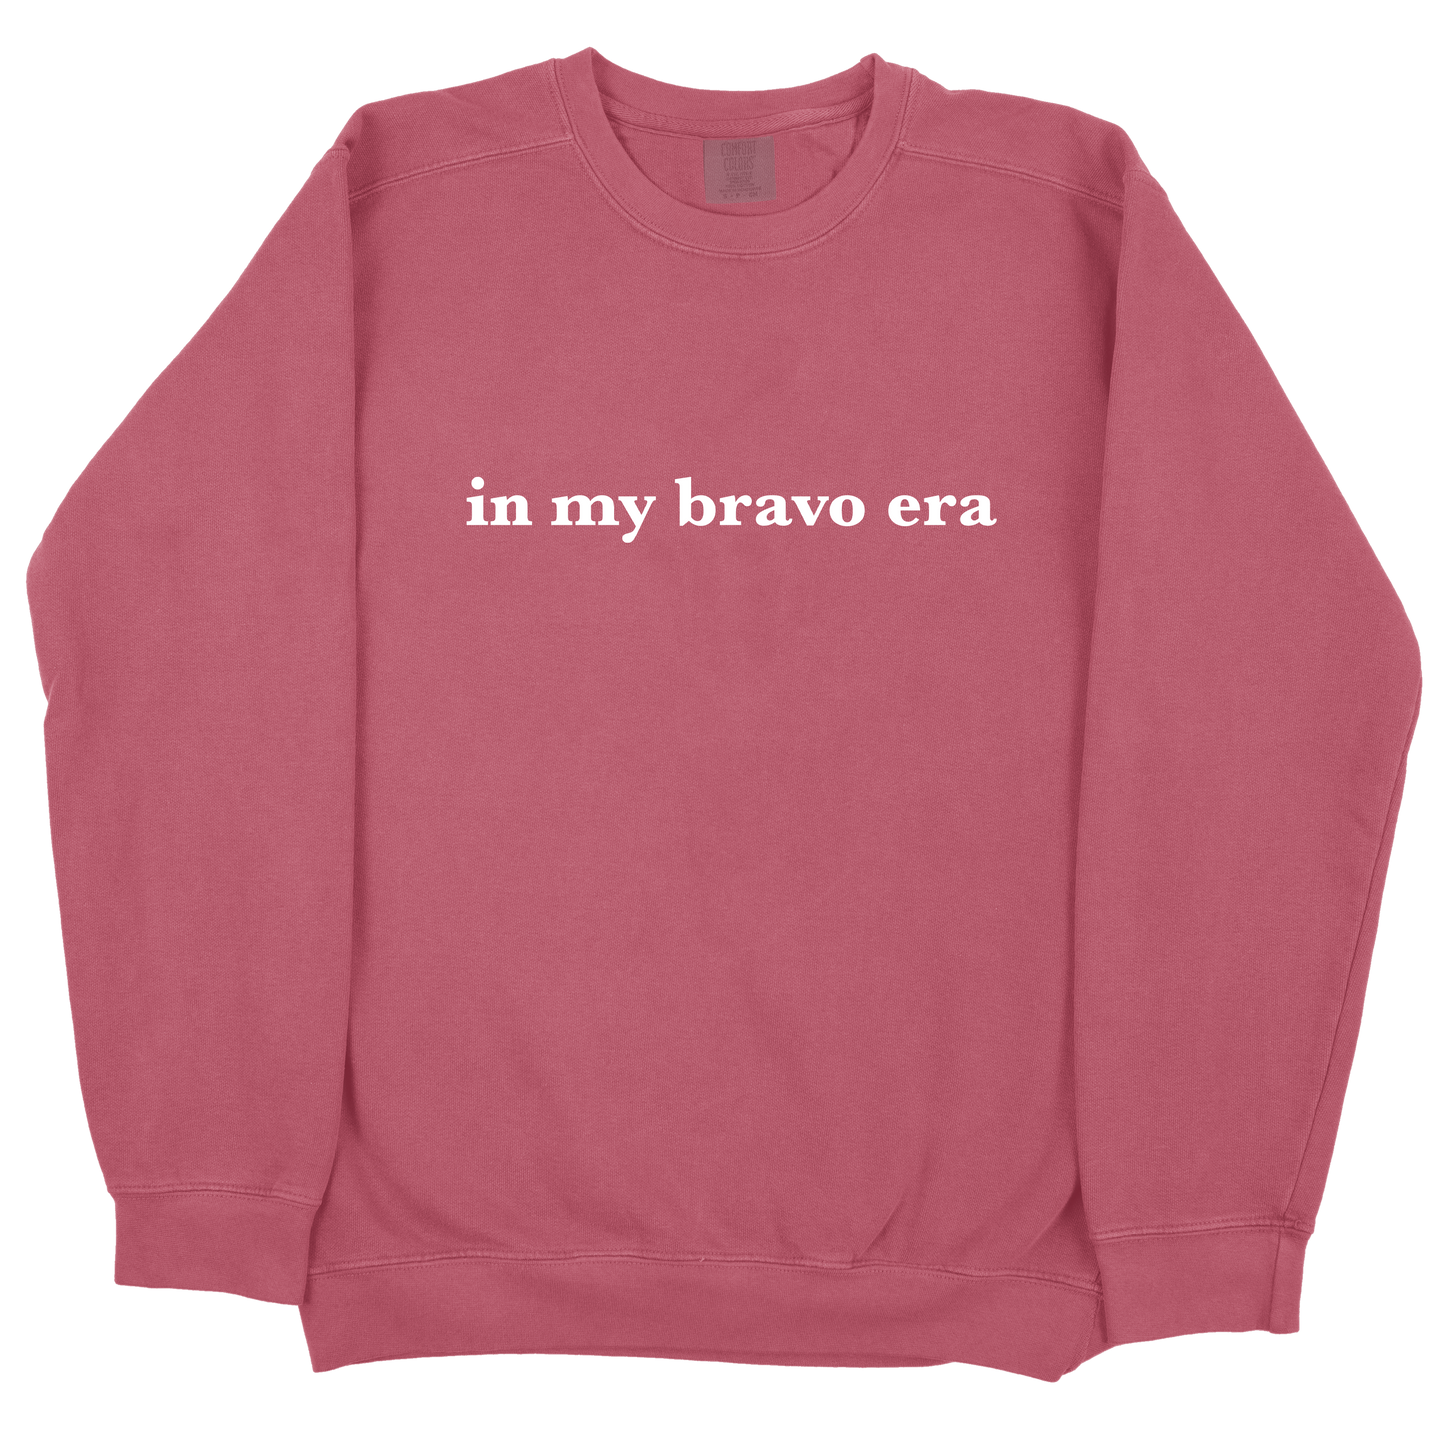 In My Bravo Era CC Sweatshirt - Crimson